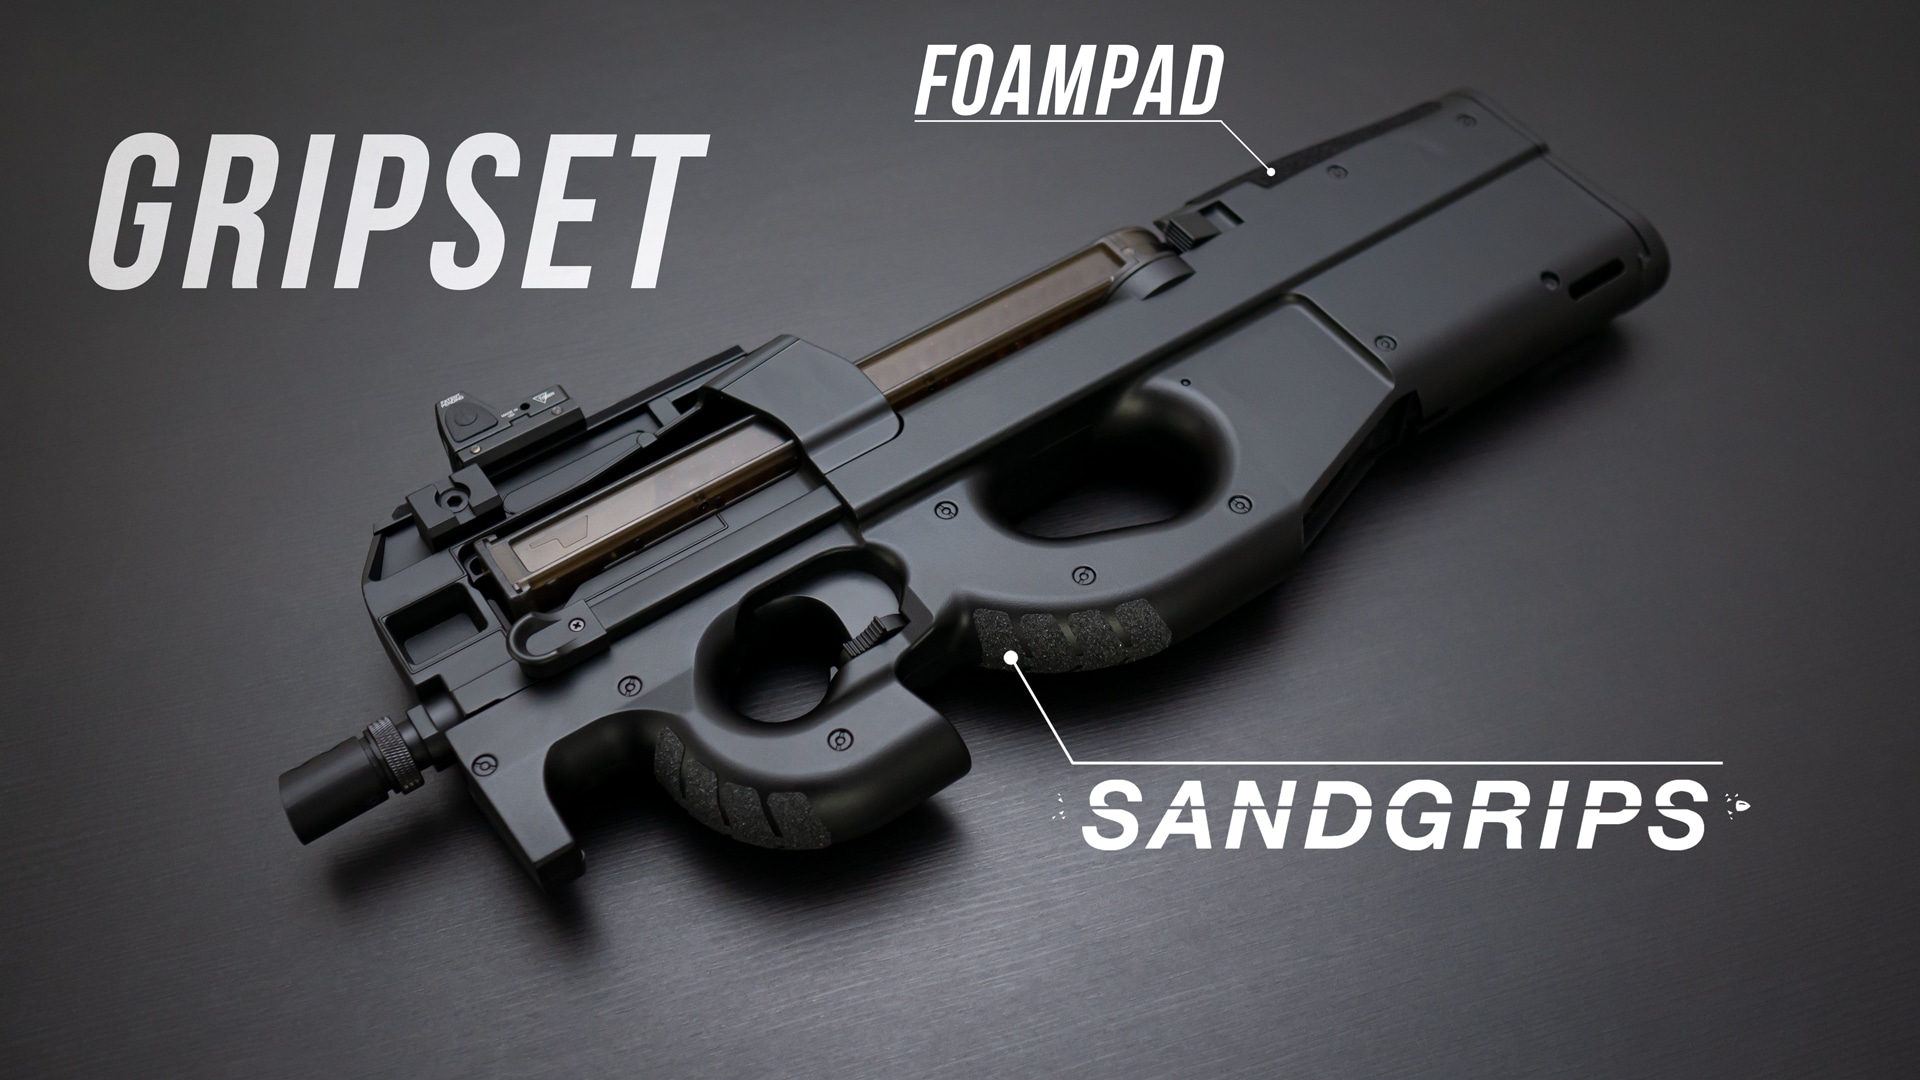 Custom-FN-P90-GripSet-SandGrips-and-FoamPad-Thumbnail-YouTube